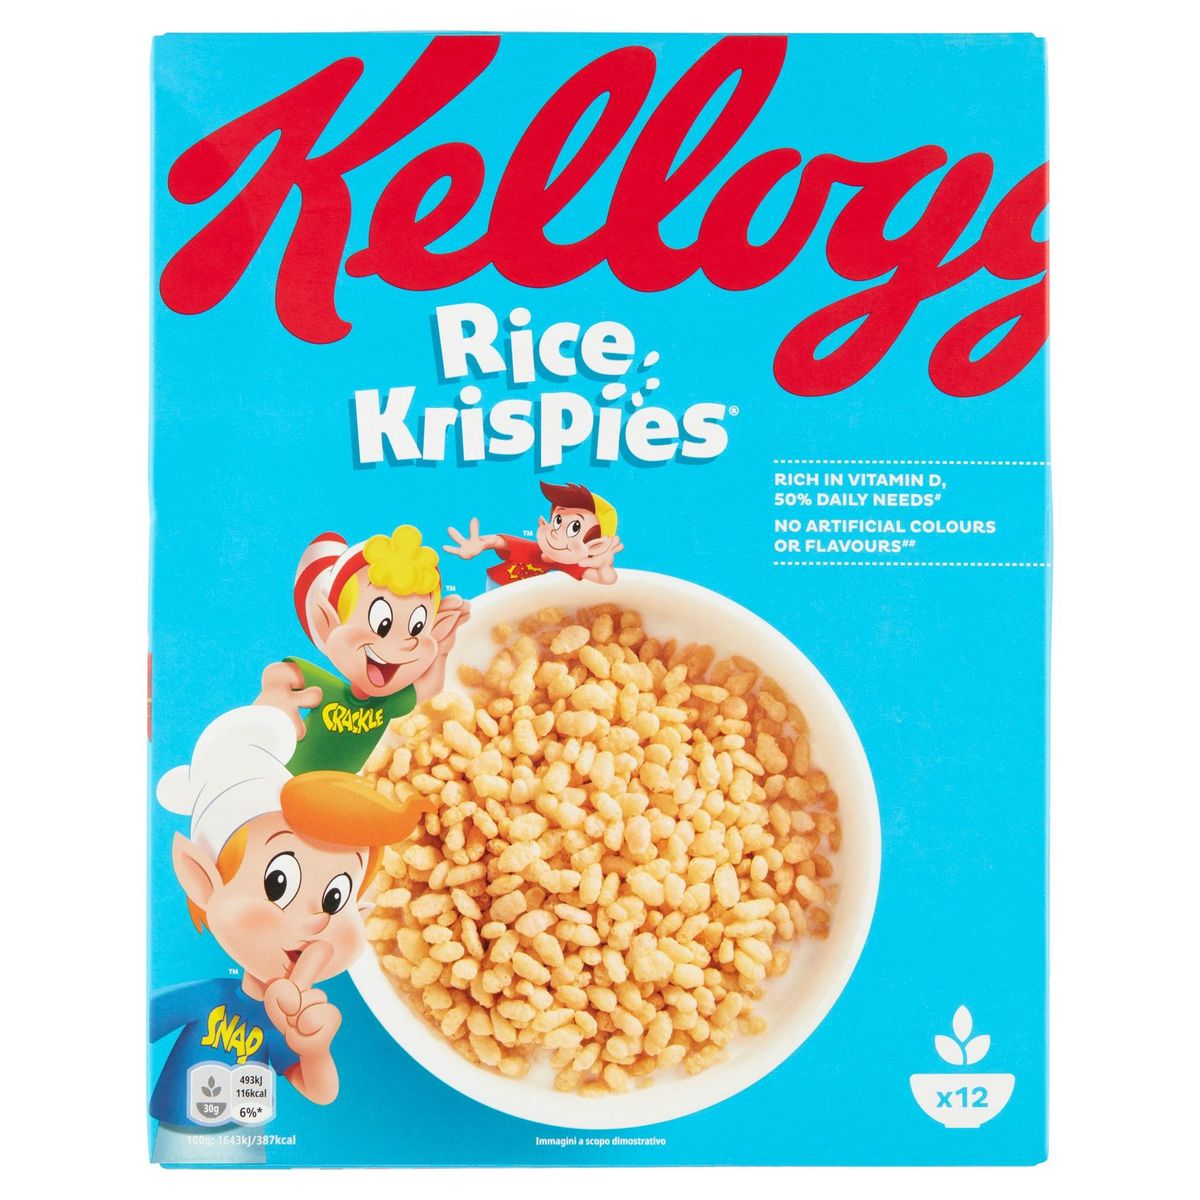 Kellogg's Rice Krispies 375 g